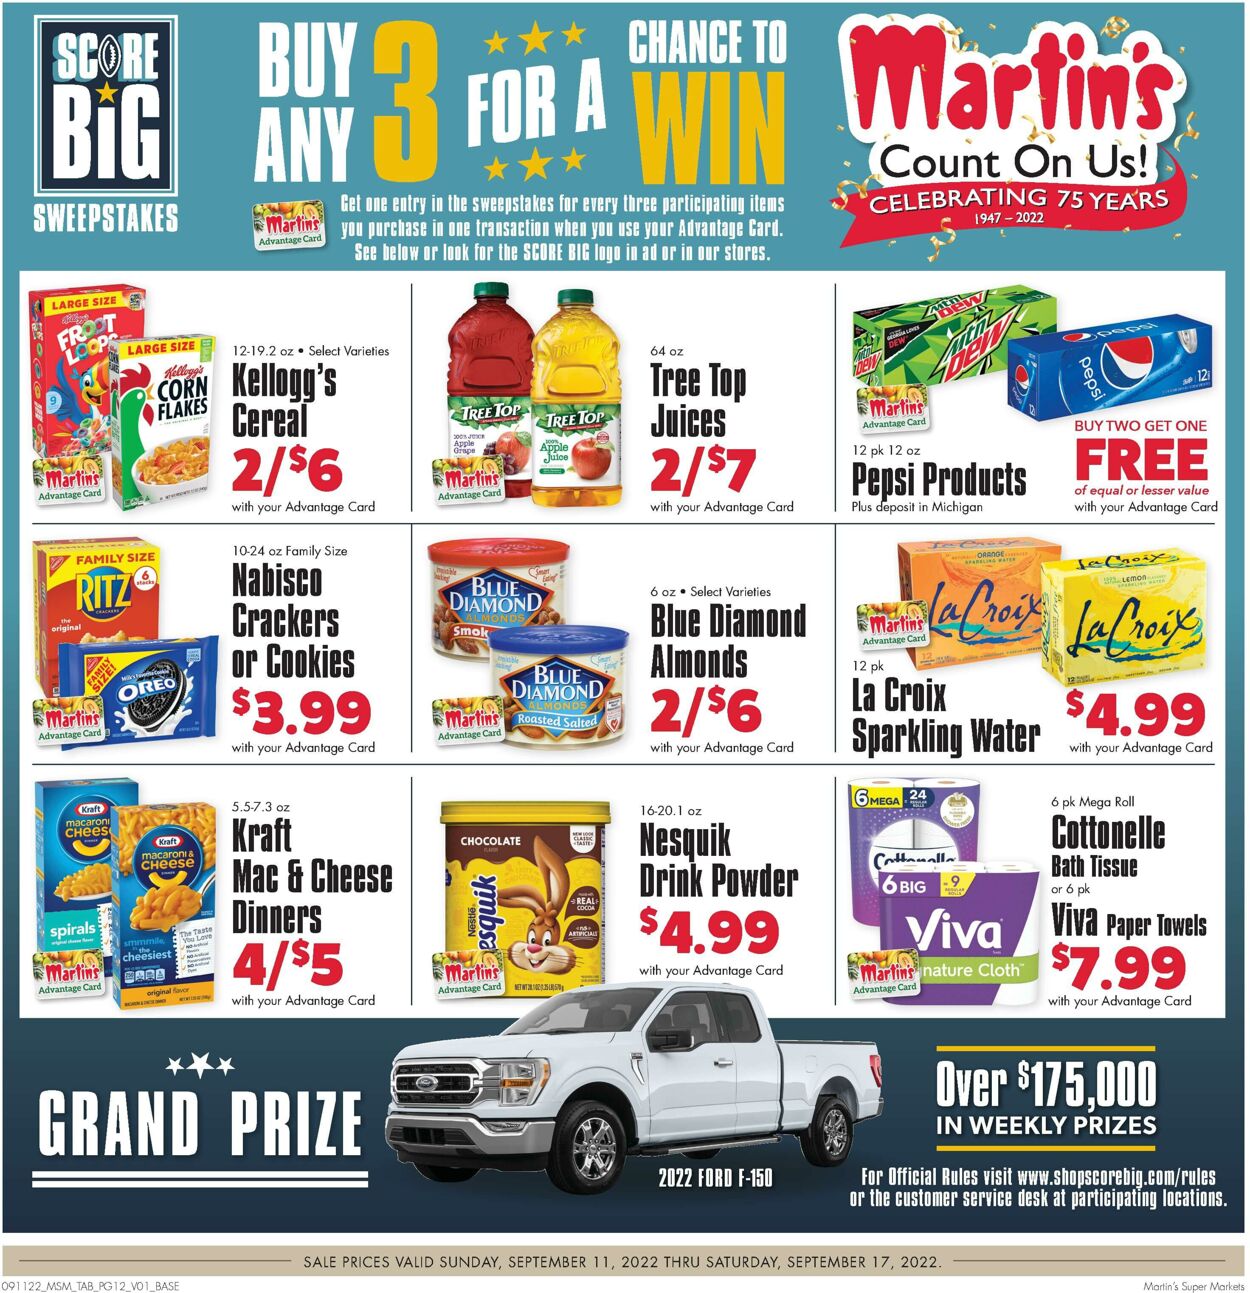 Weekly ad Martin's Supermarkets 09/11/2022 - 09/17/2022